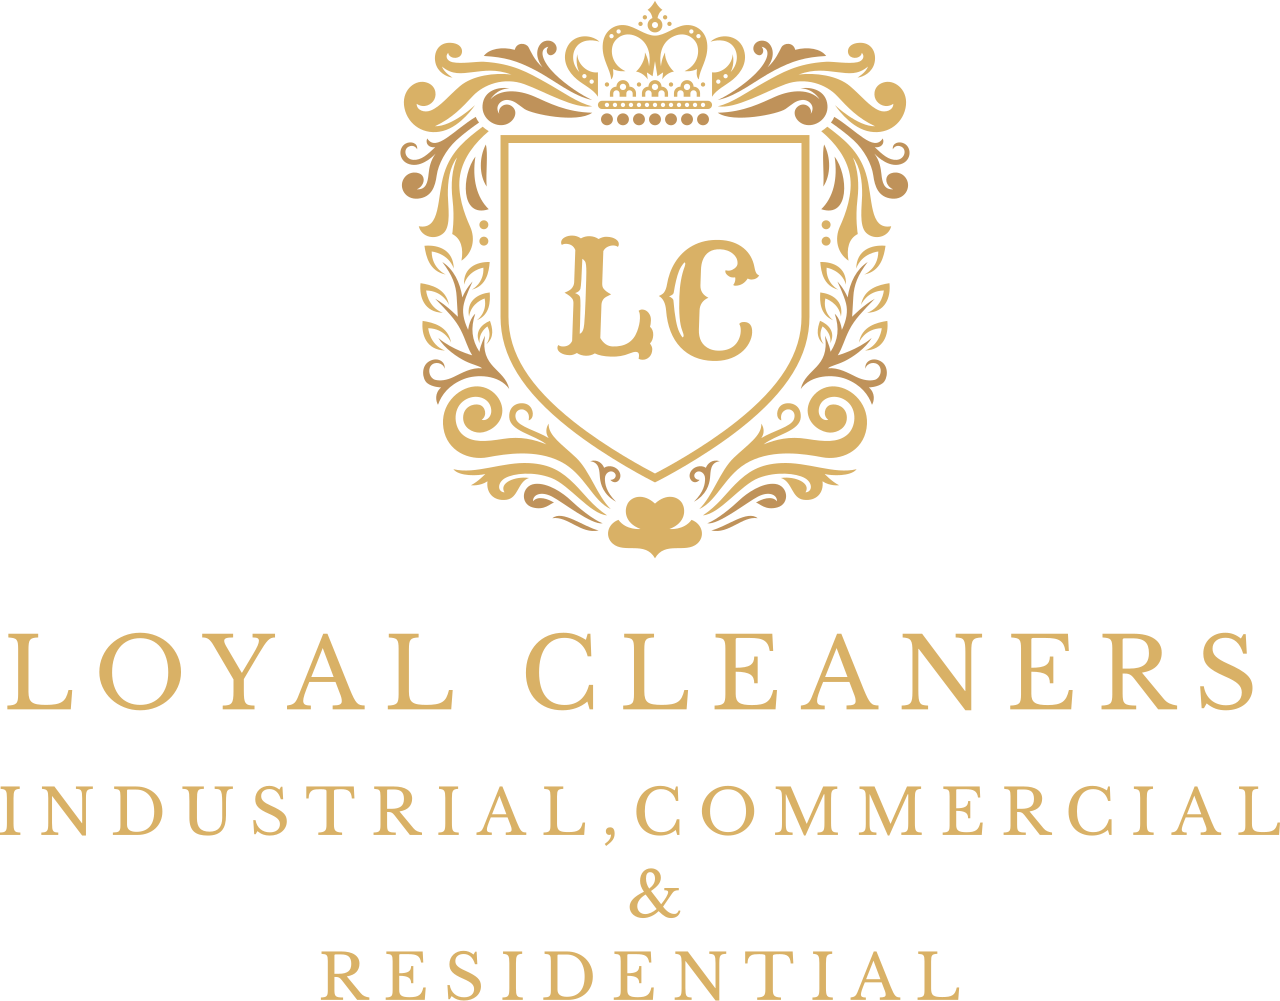 LOYAL CLEANERS 's logo